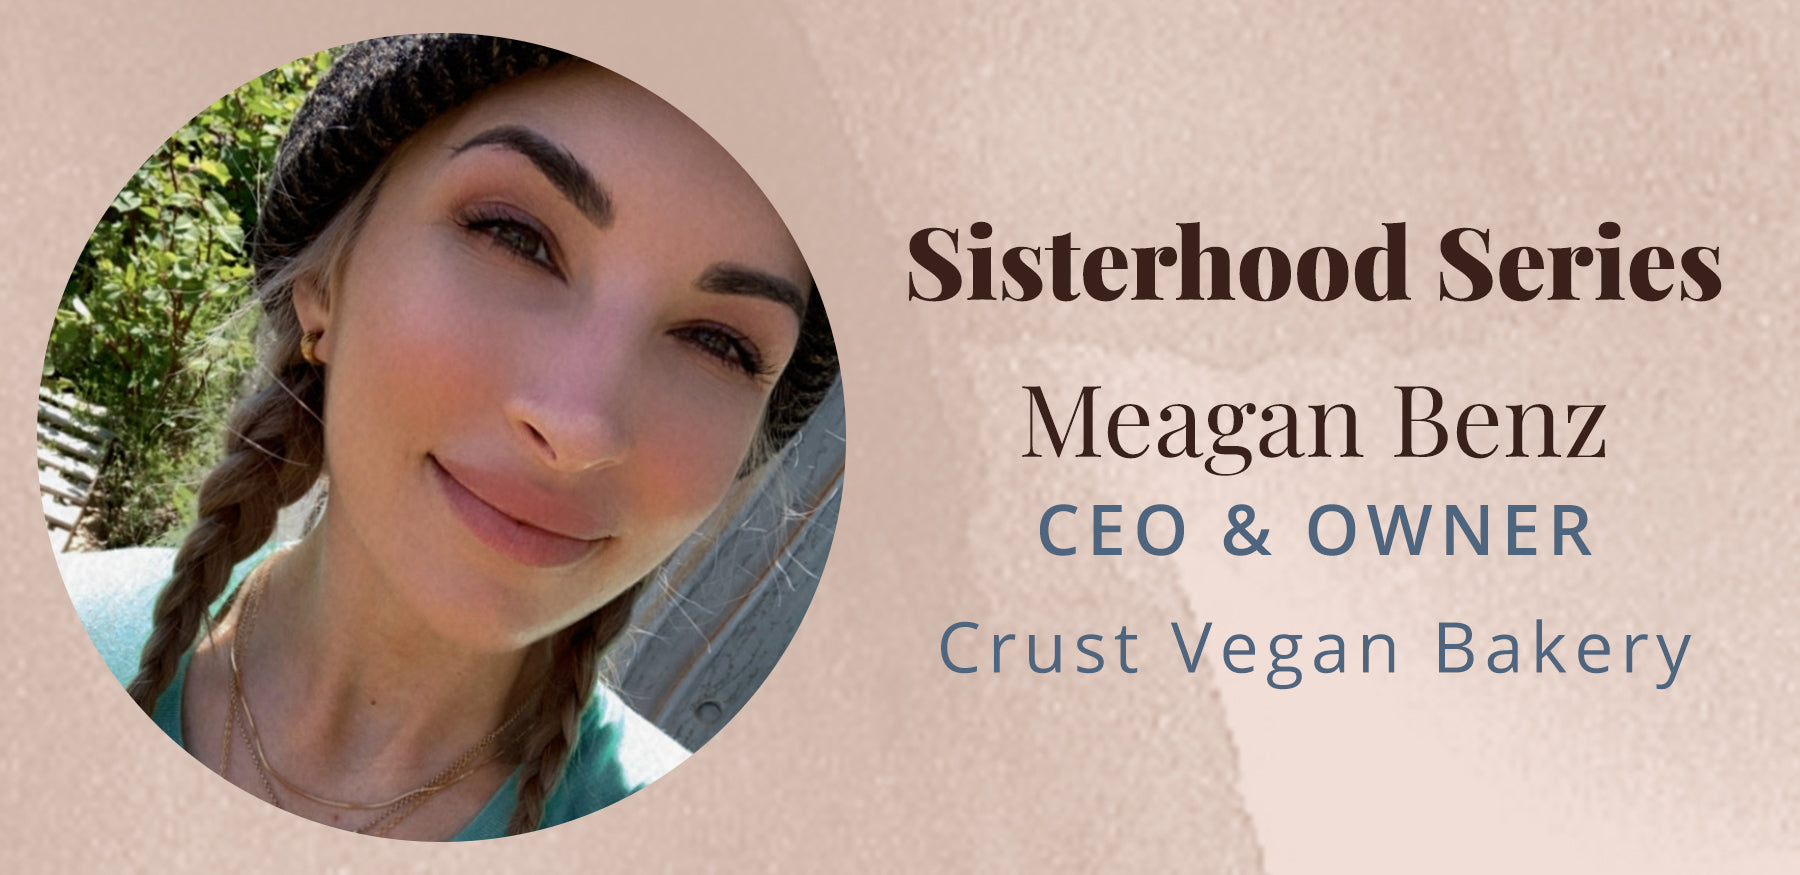 Sisterhood Series with Meagan Benz